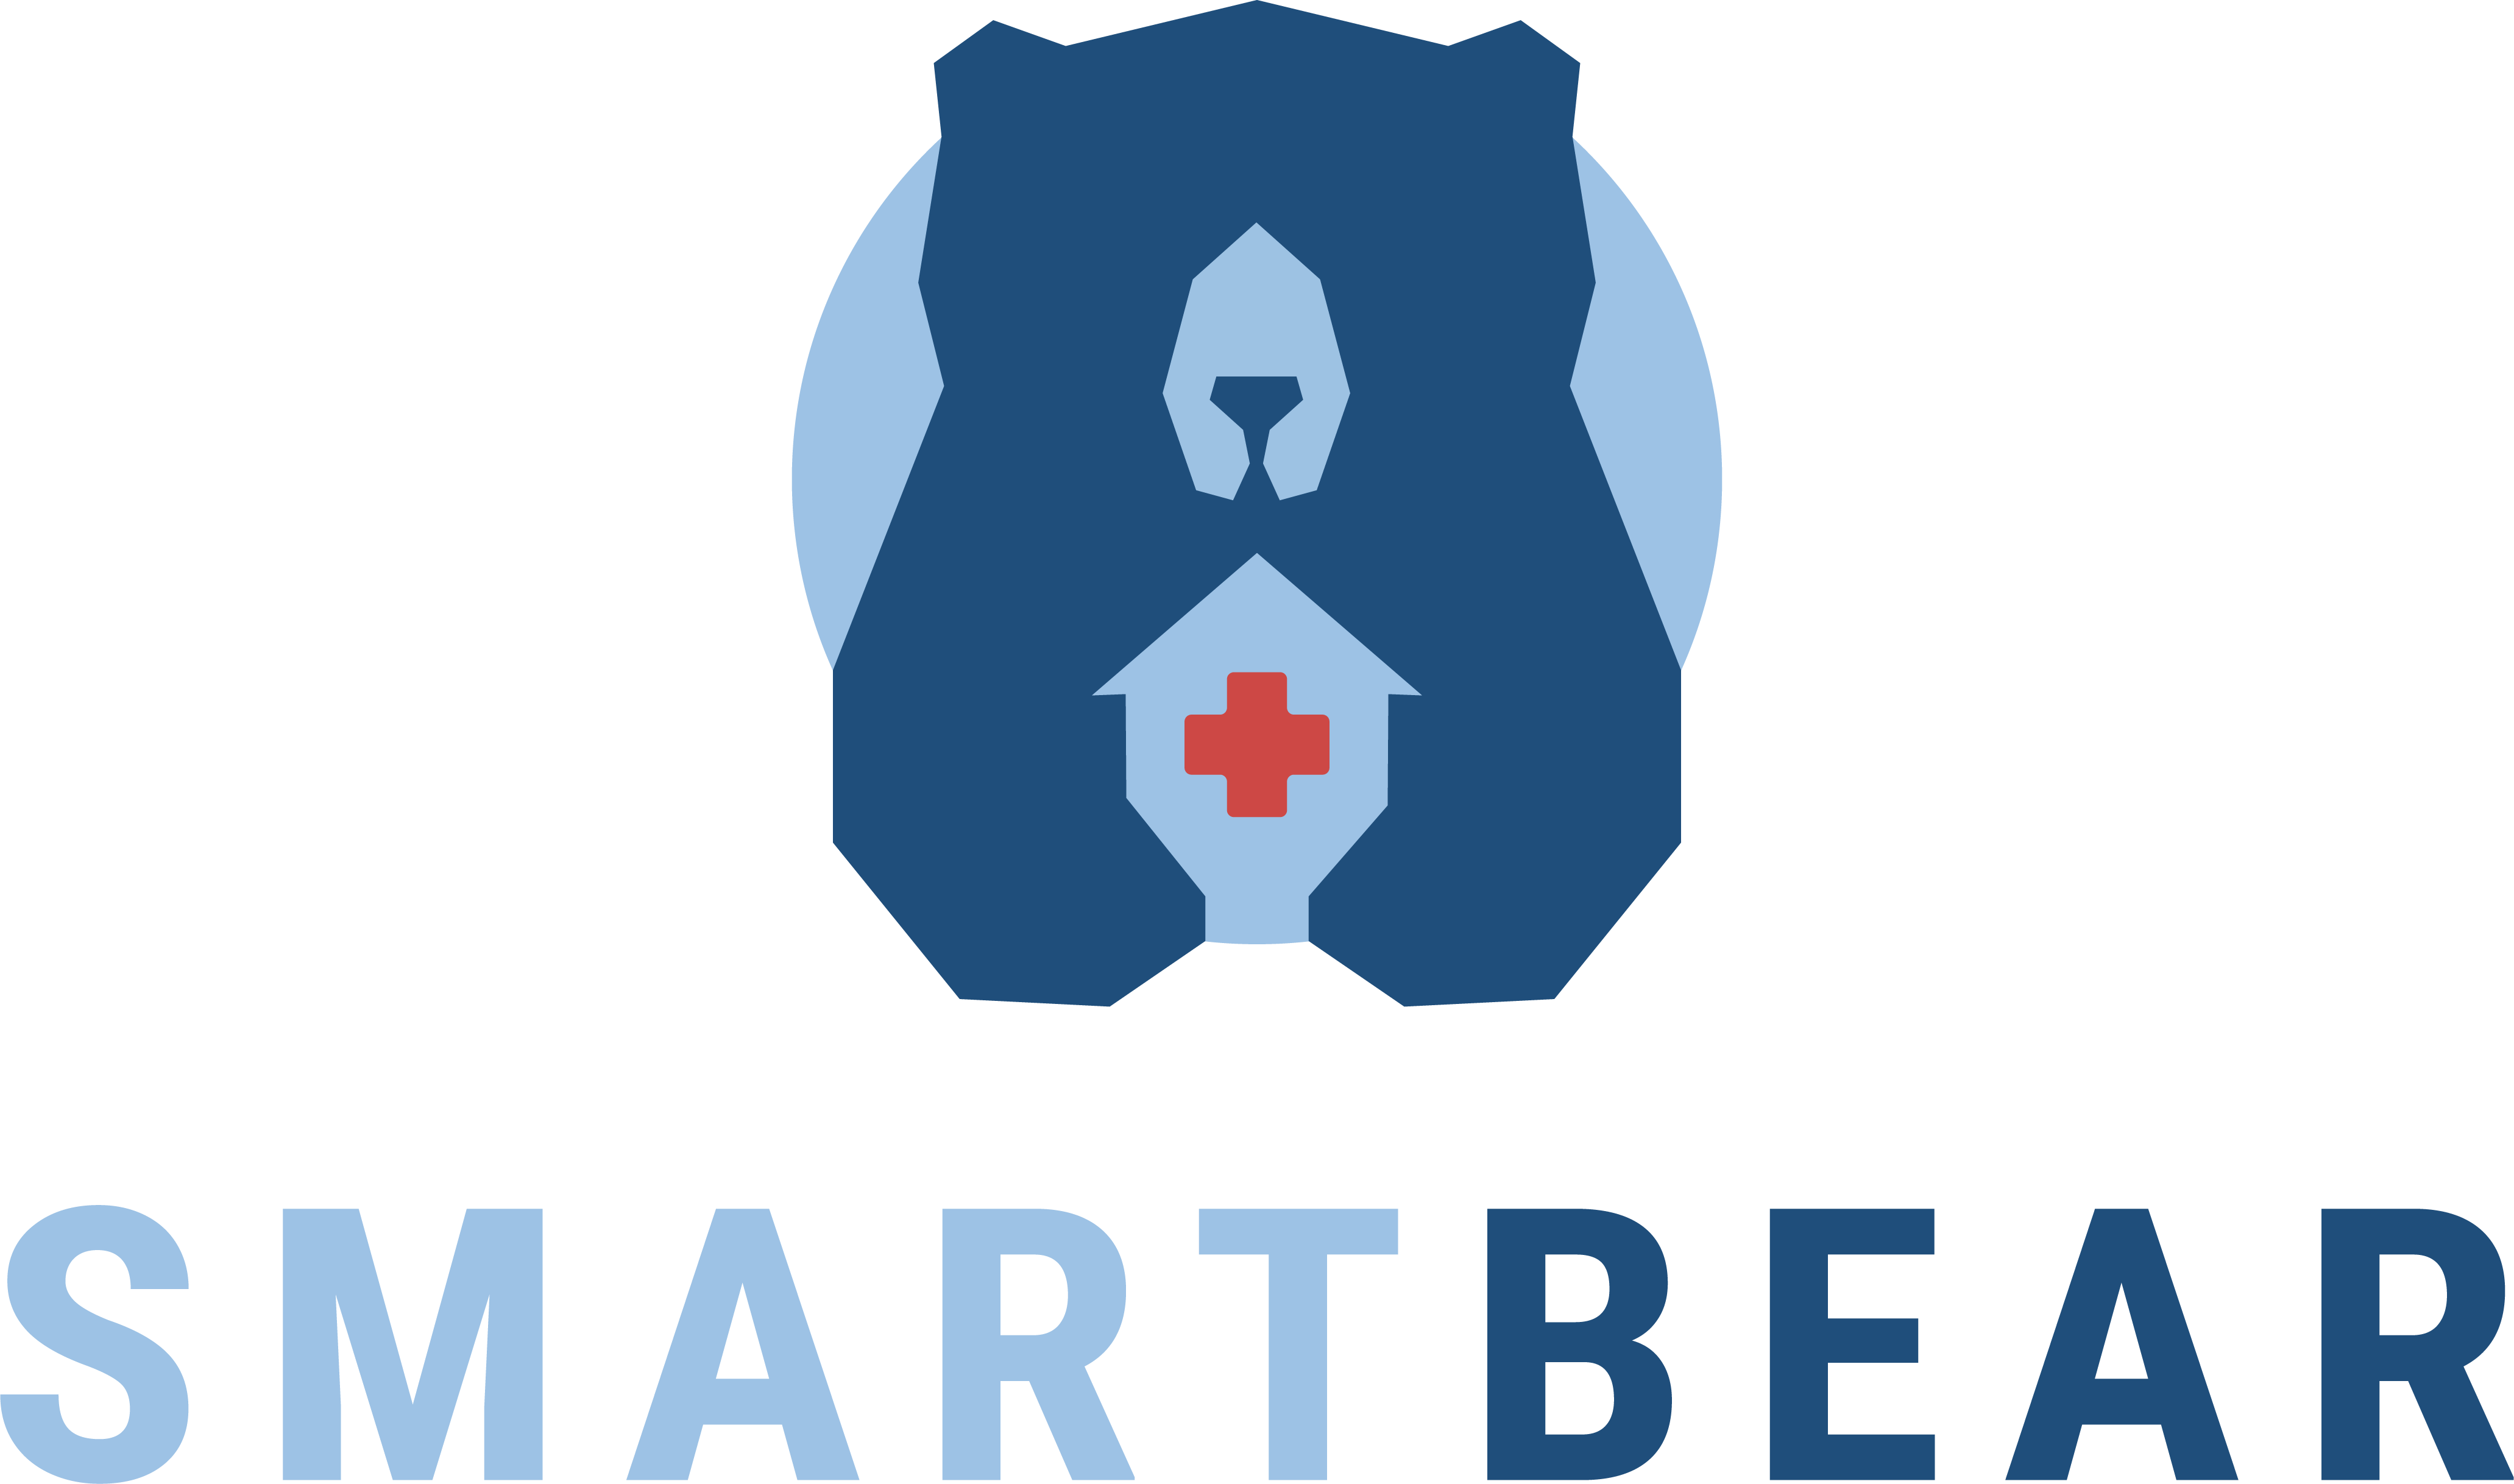 SMART BEAR logo